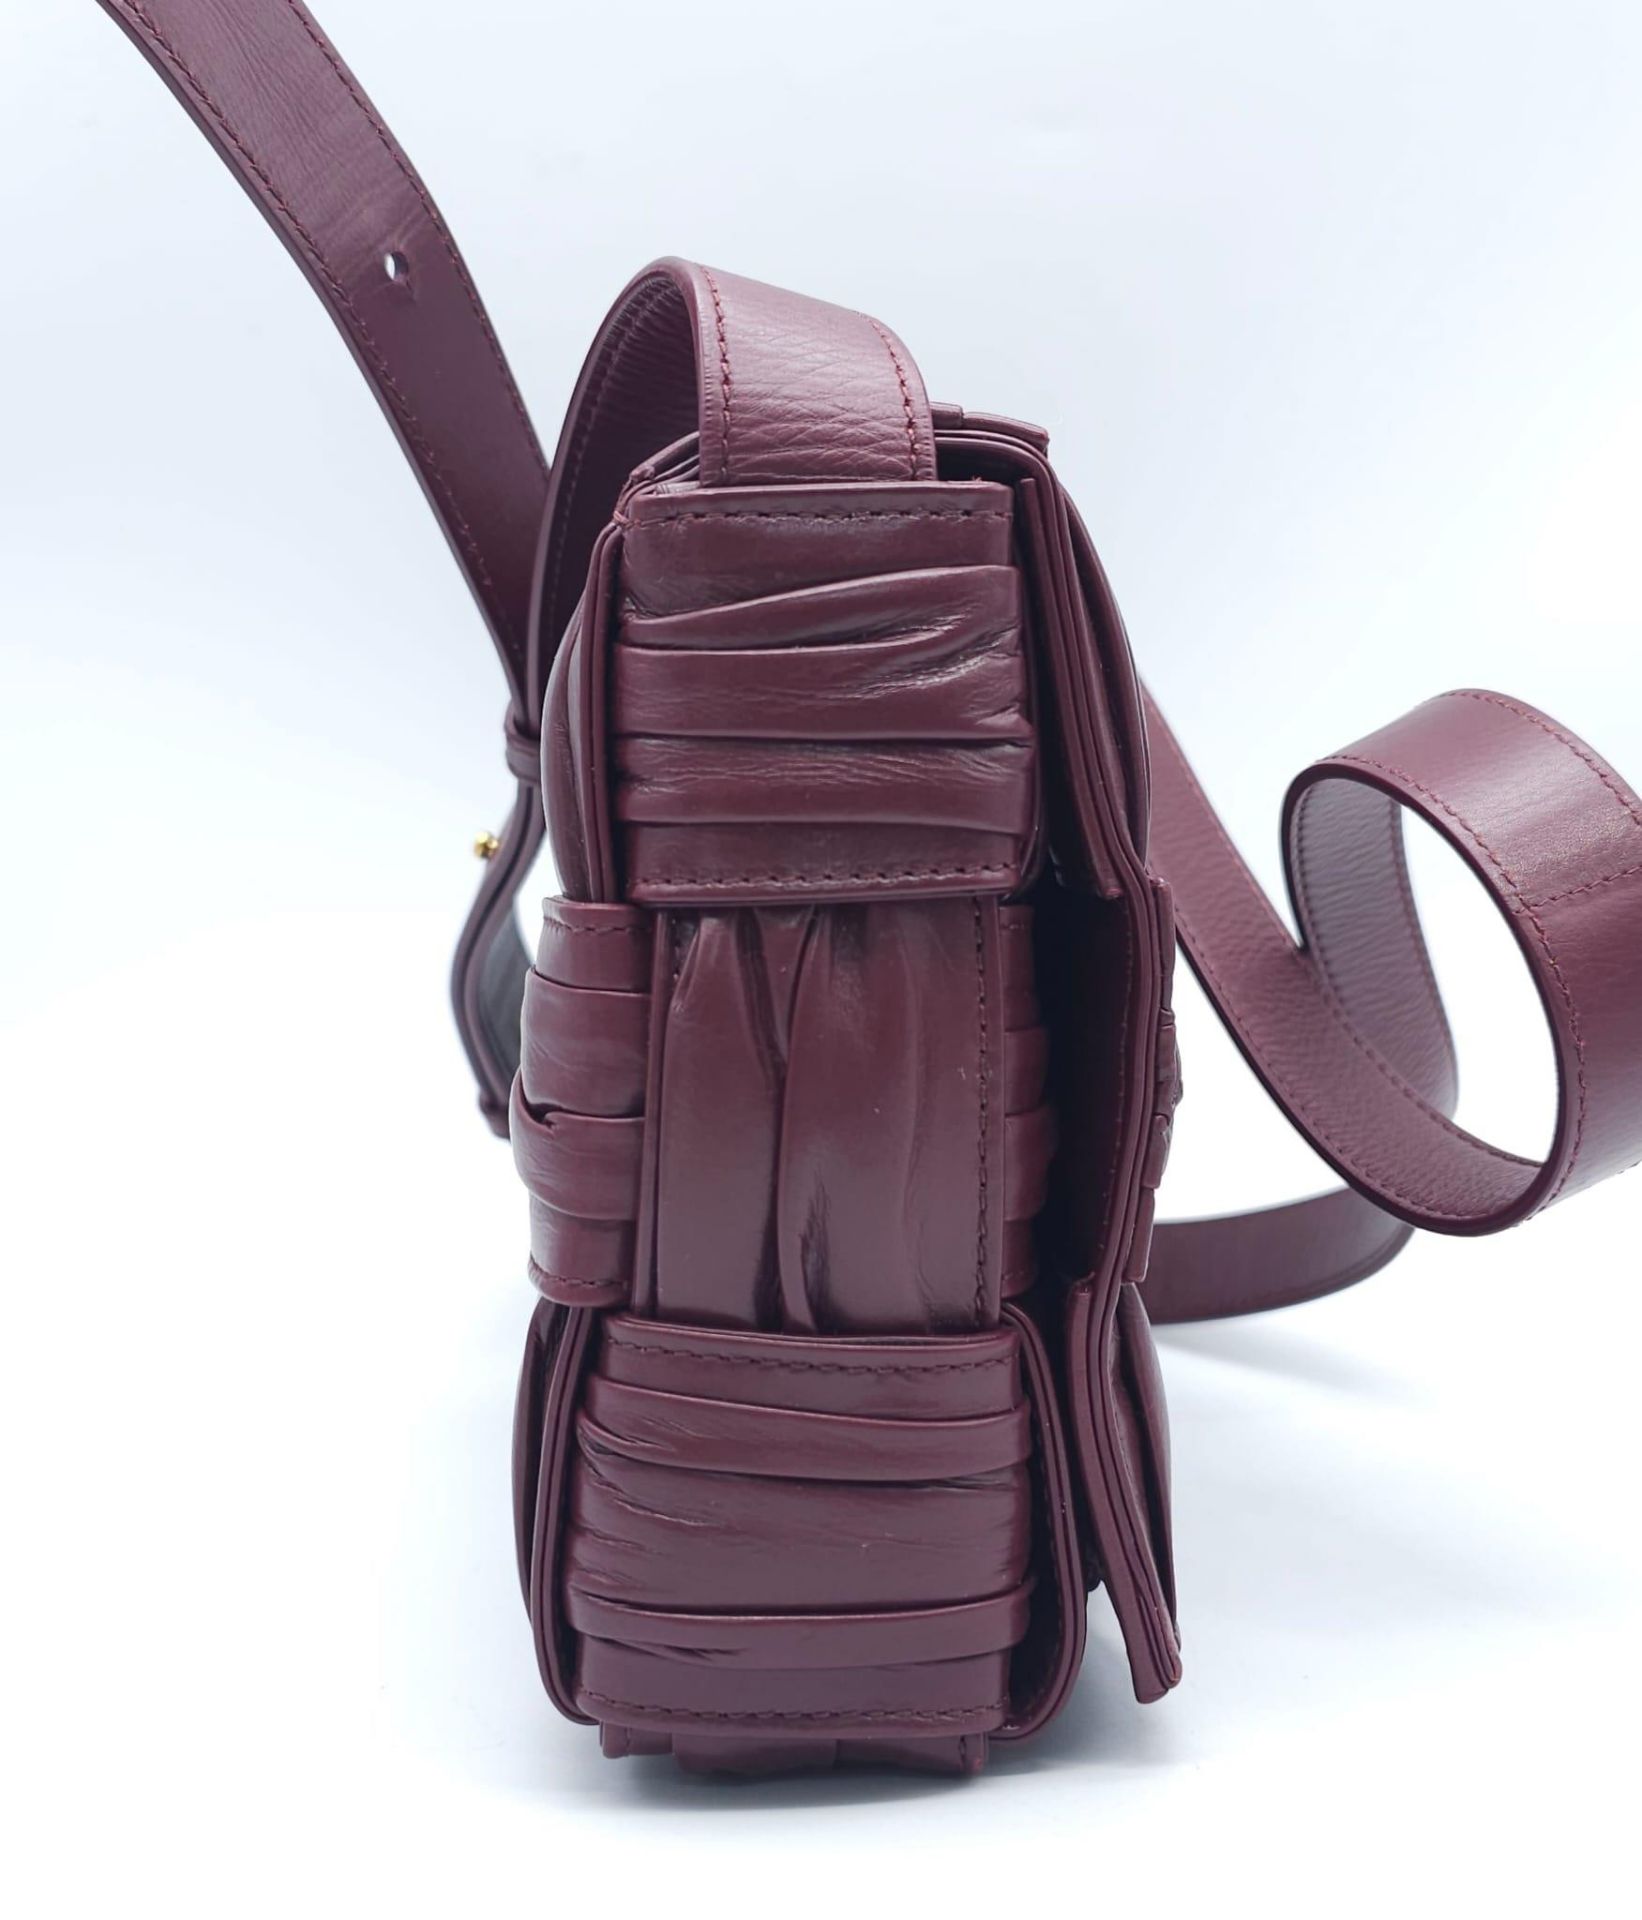 Bottega Veneta Brick Cassette Bag. Smooth burgundy leather, signature orthogonal weaving, adjustable - Image 5 of 12